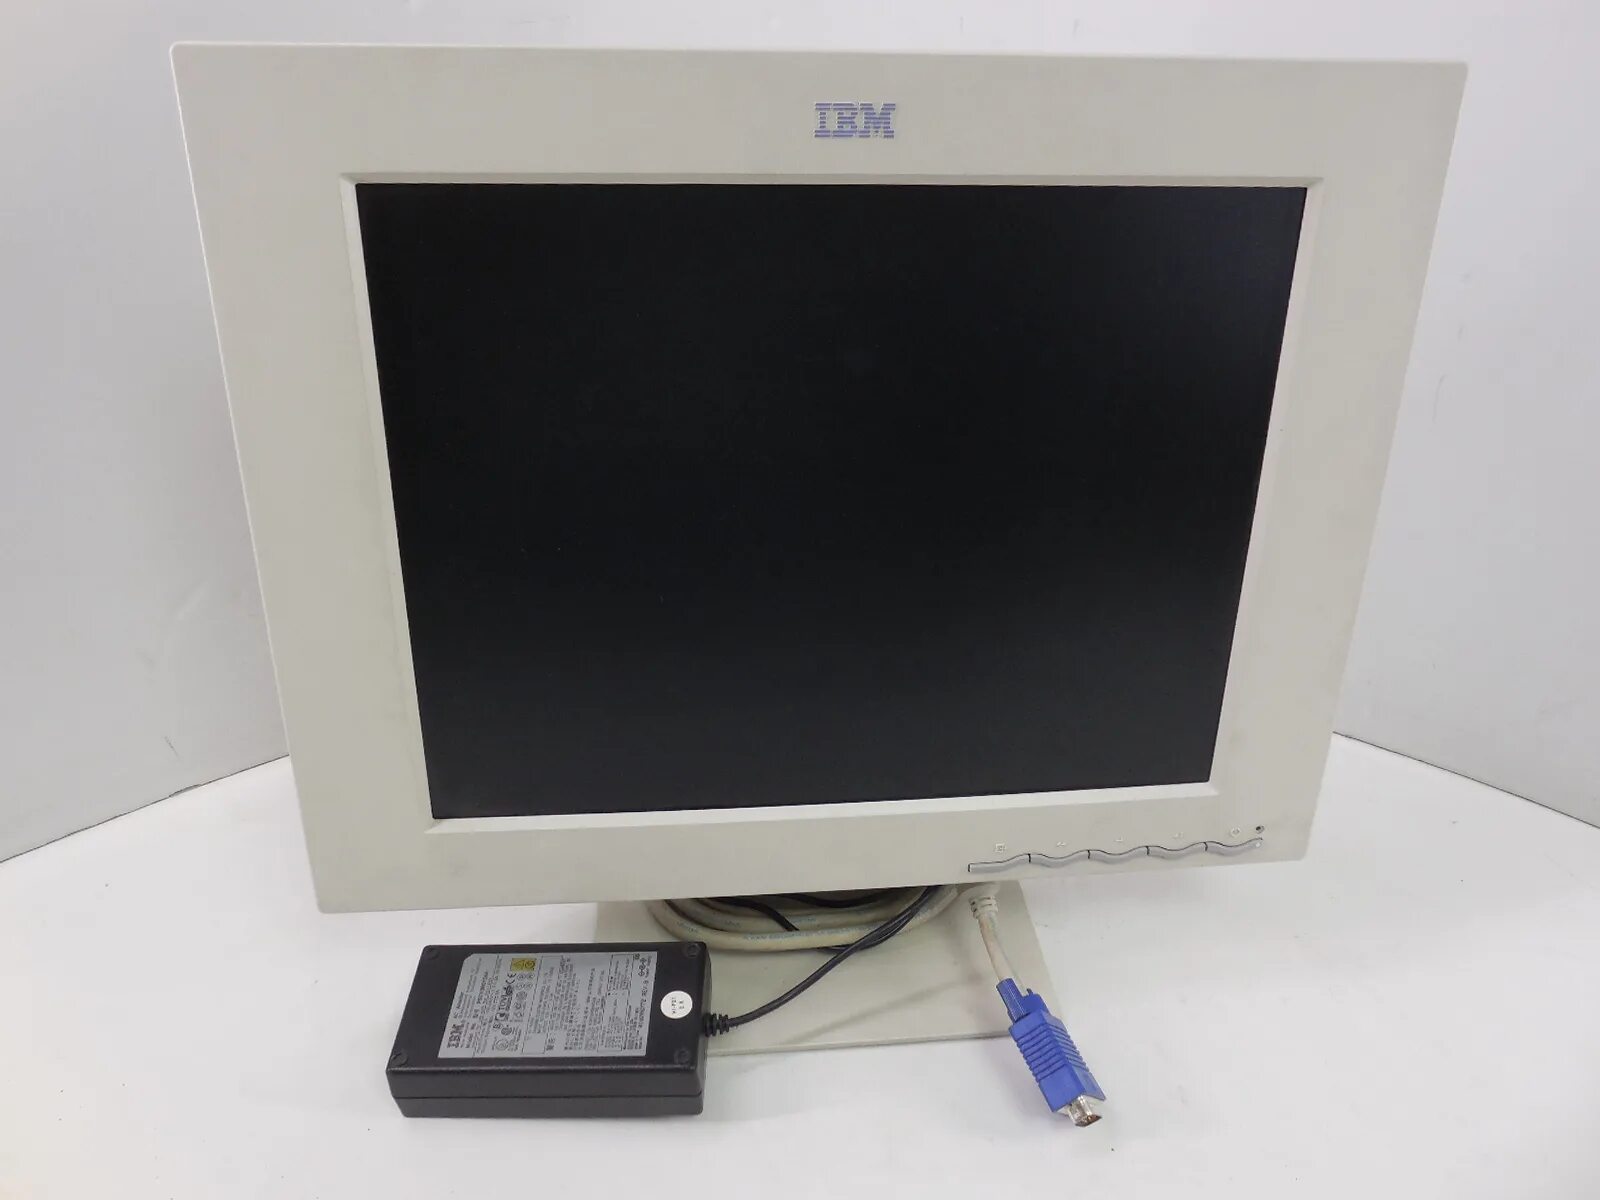 Монитор модель: IBM 9511-aw1. Монитор TFT 15" IBM 9511-aw4. Монитор IBM 15 дюймов. Монитор IBM 6780.